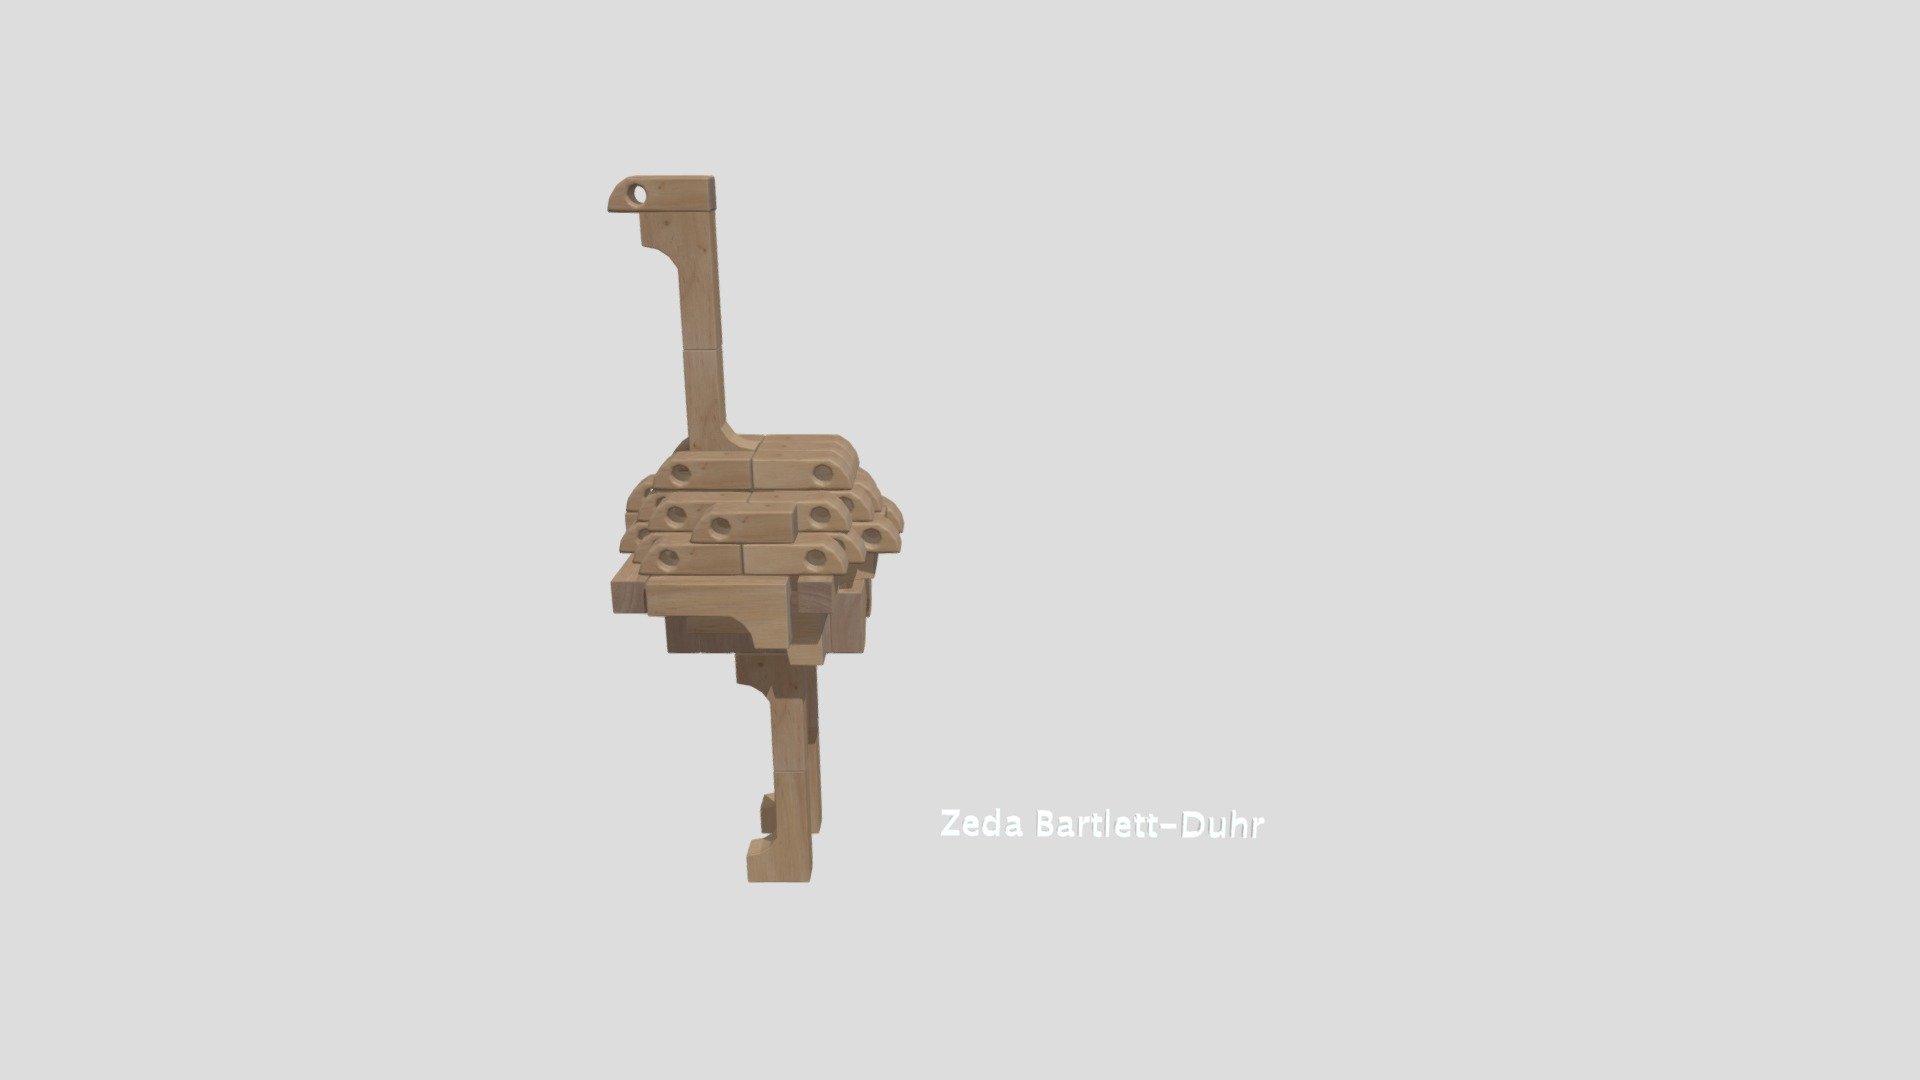 Ostrich made of blocks